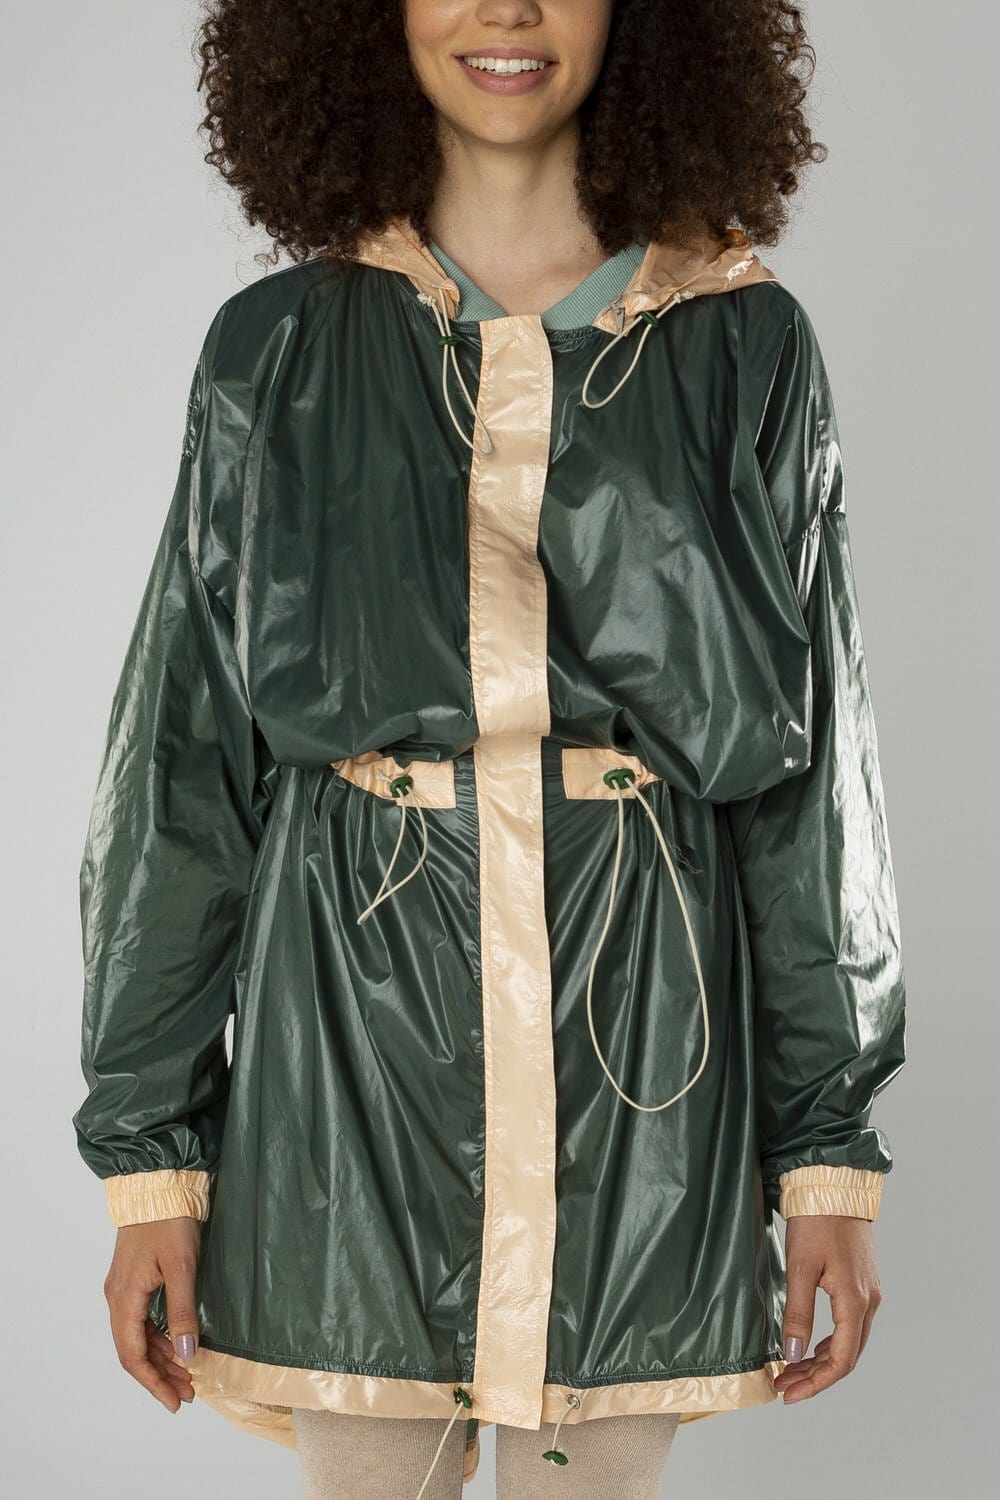 Military but cute raincoat